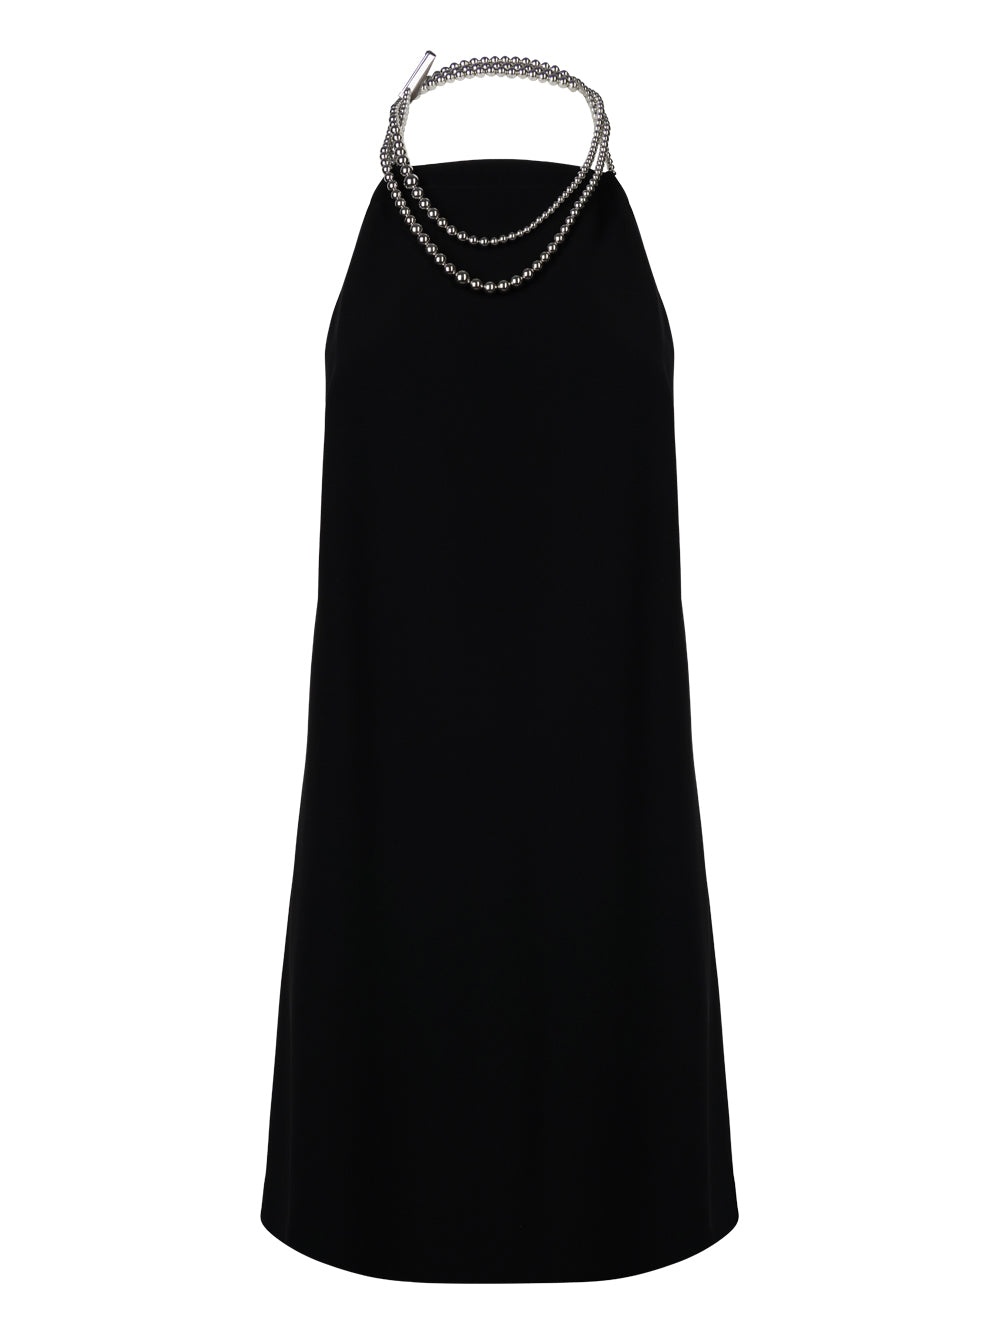 PRADA BLACK SUIT DRESS - 3